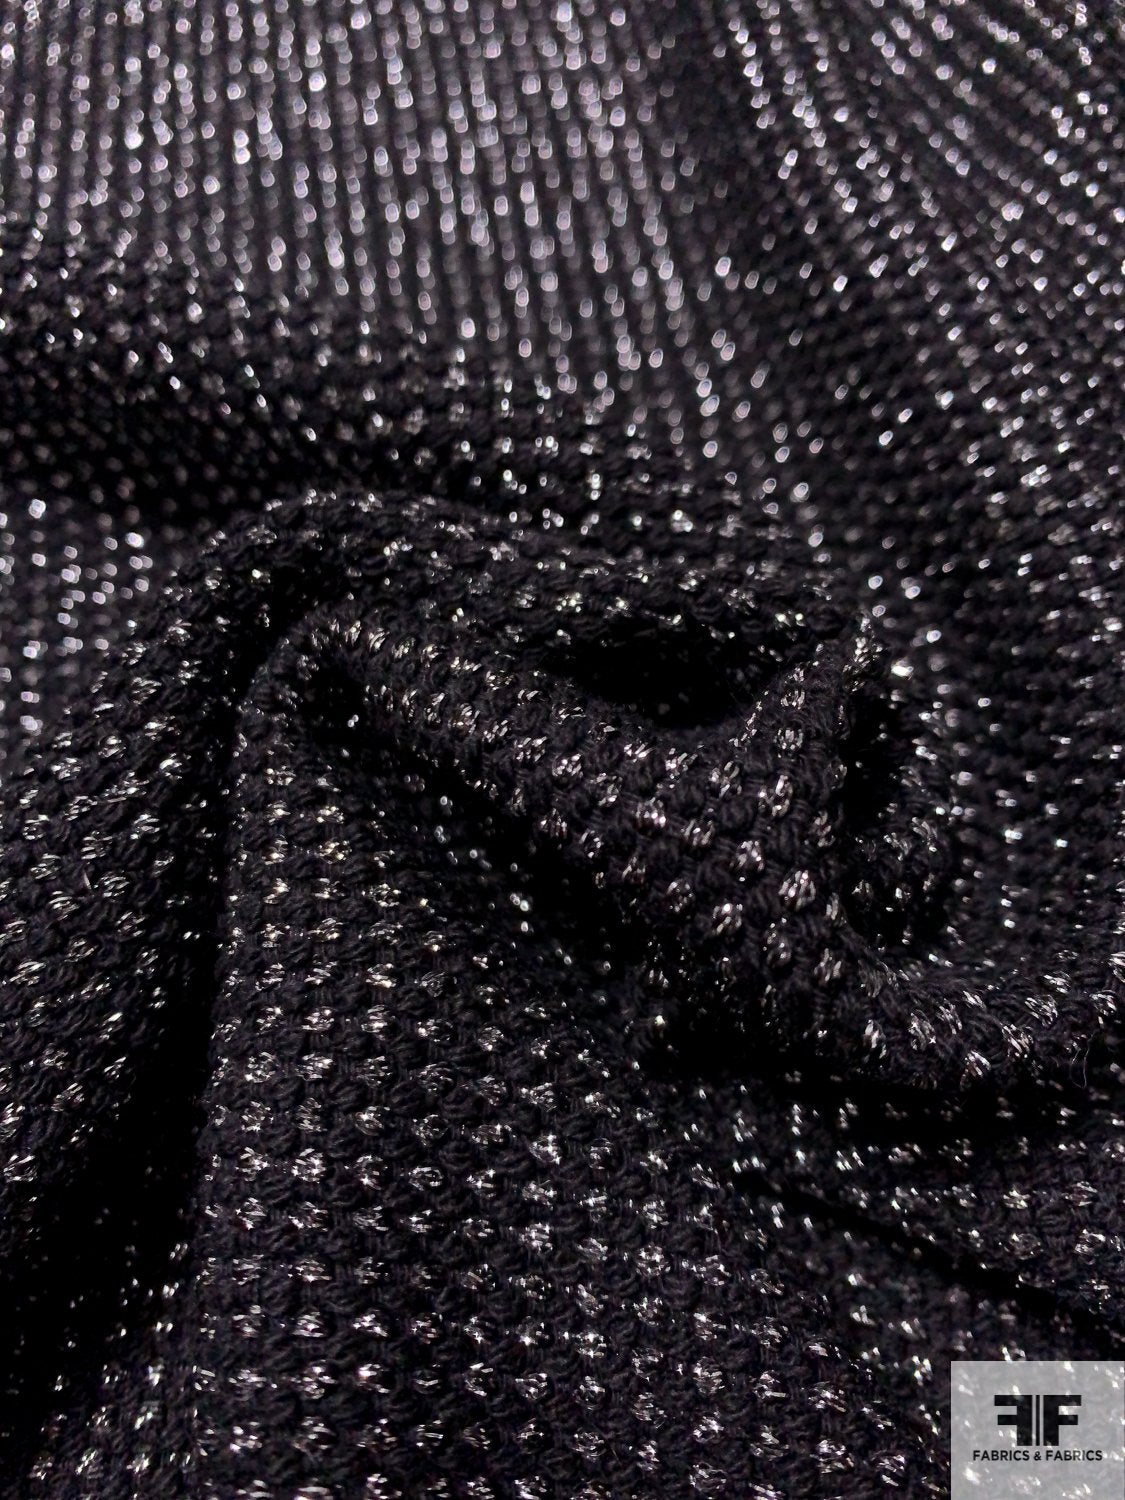 Cotton Blend Dot Lurex Tweed - Black / Silver